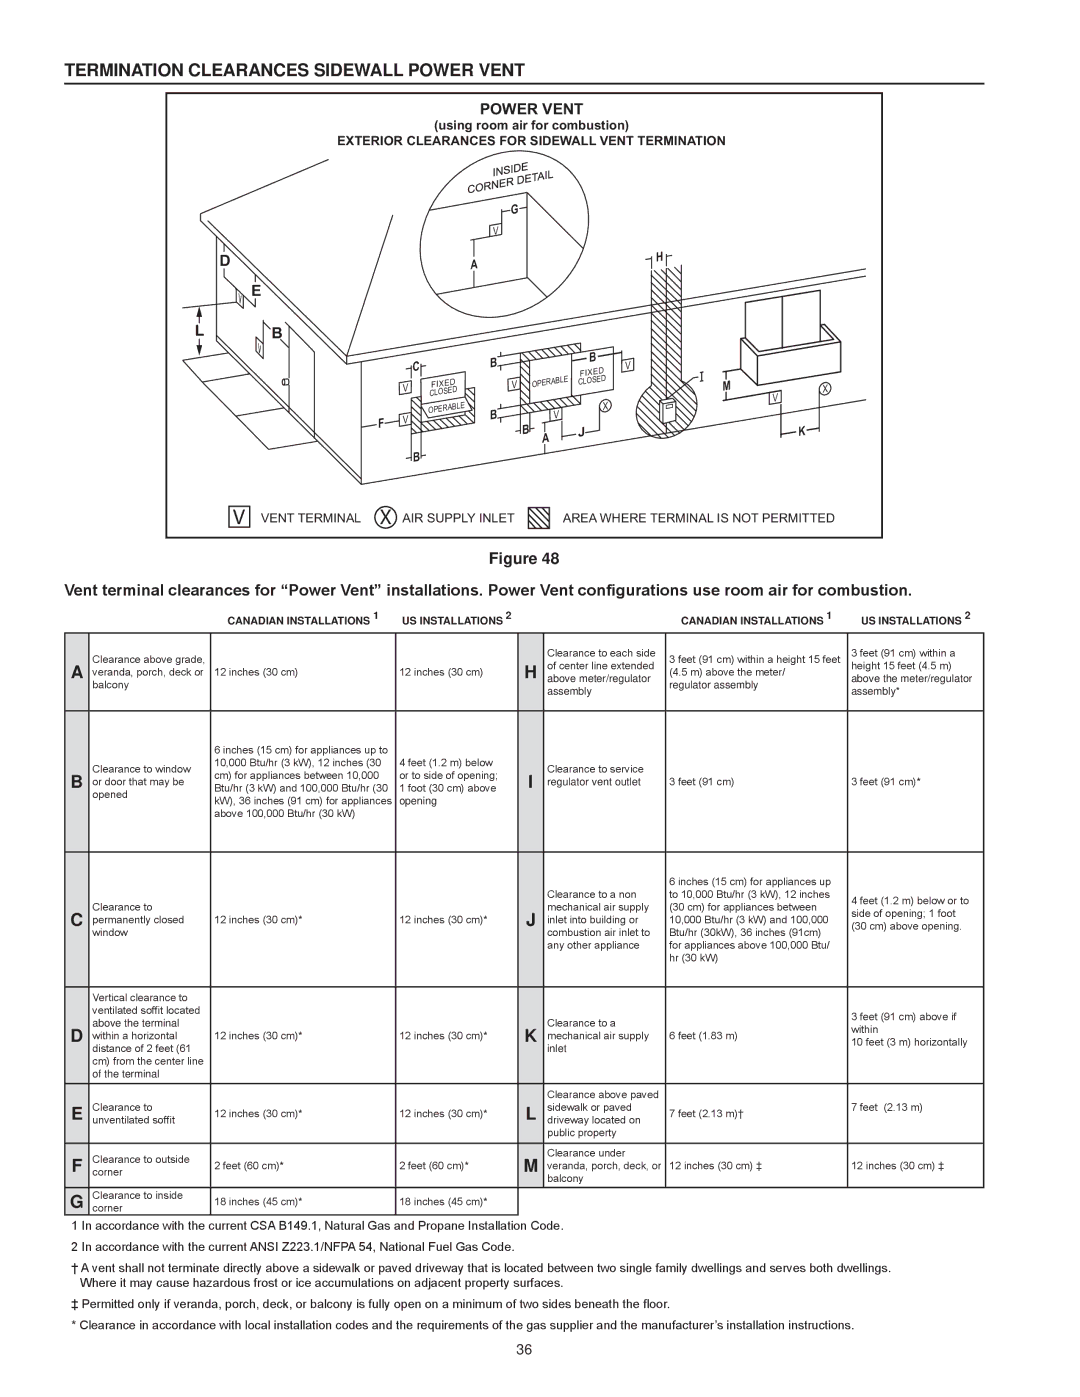 American Water Heater AHCG/HCG3 60T 120 - AHCG3/HCG3 100T 250 instruction manual Termination Clearances Sidewall Power Vent 